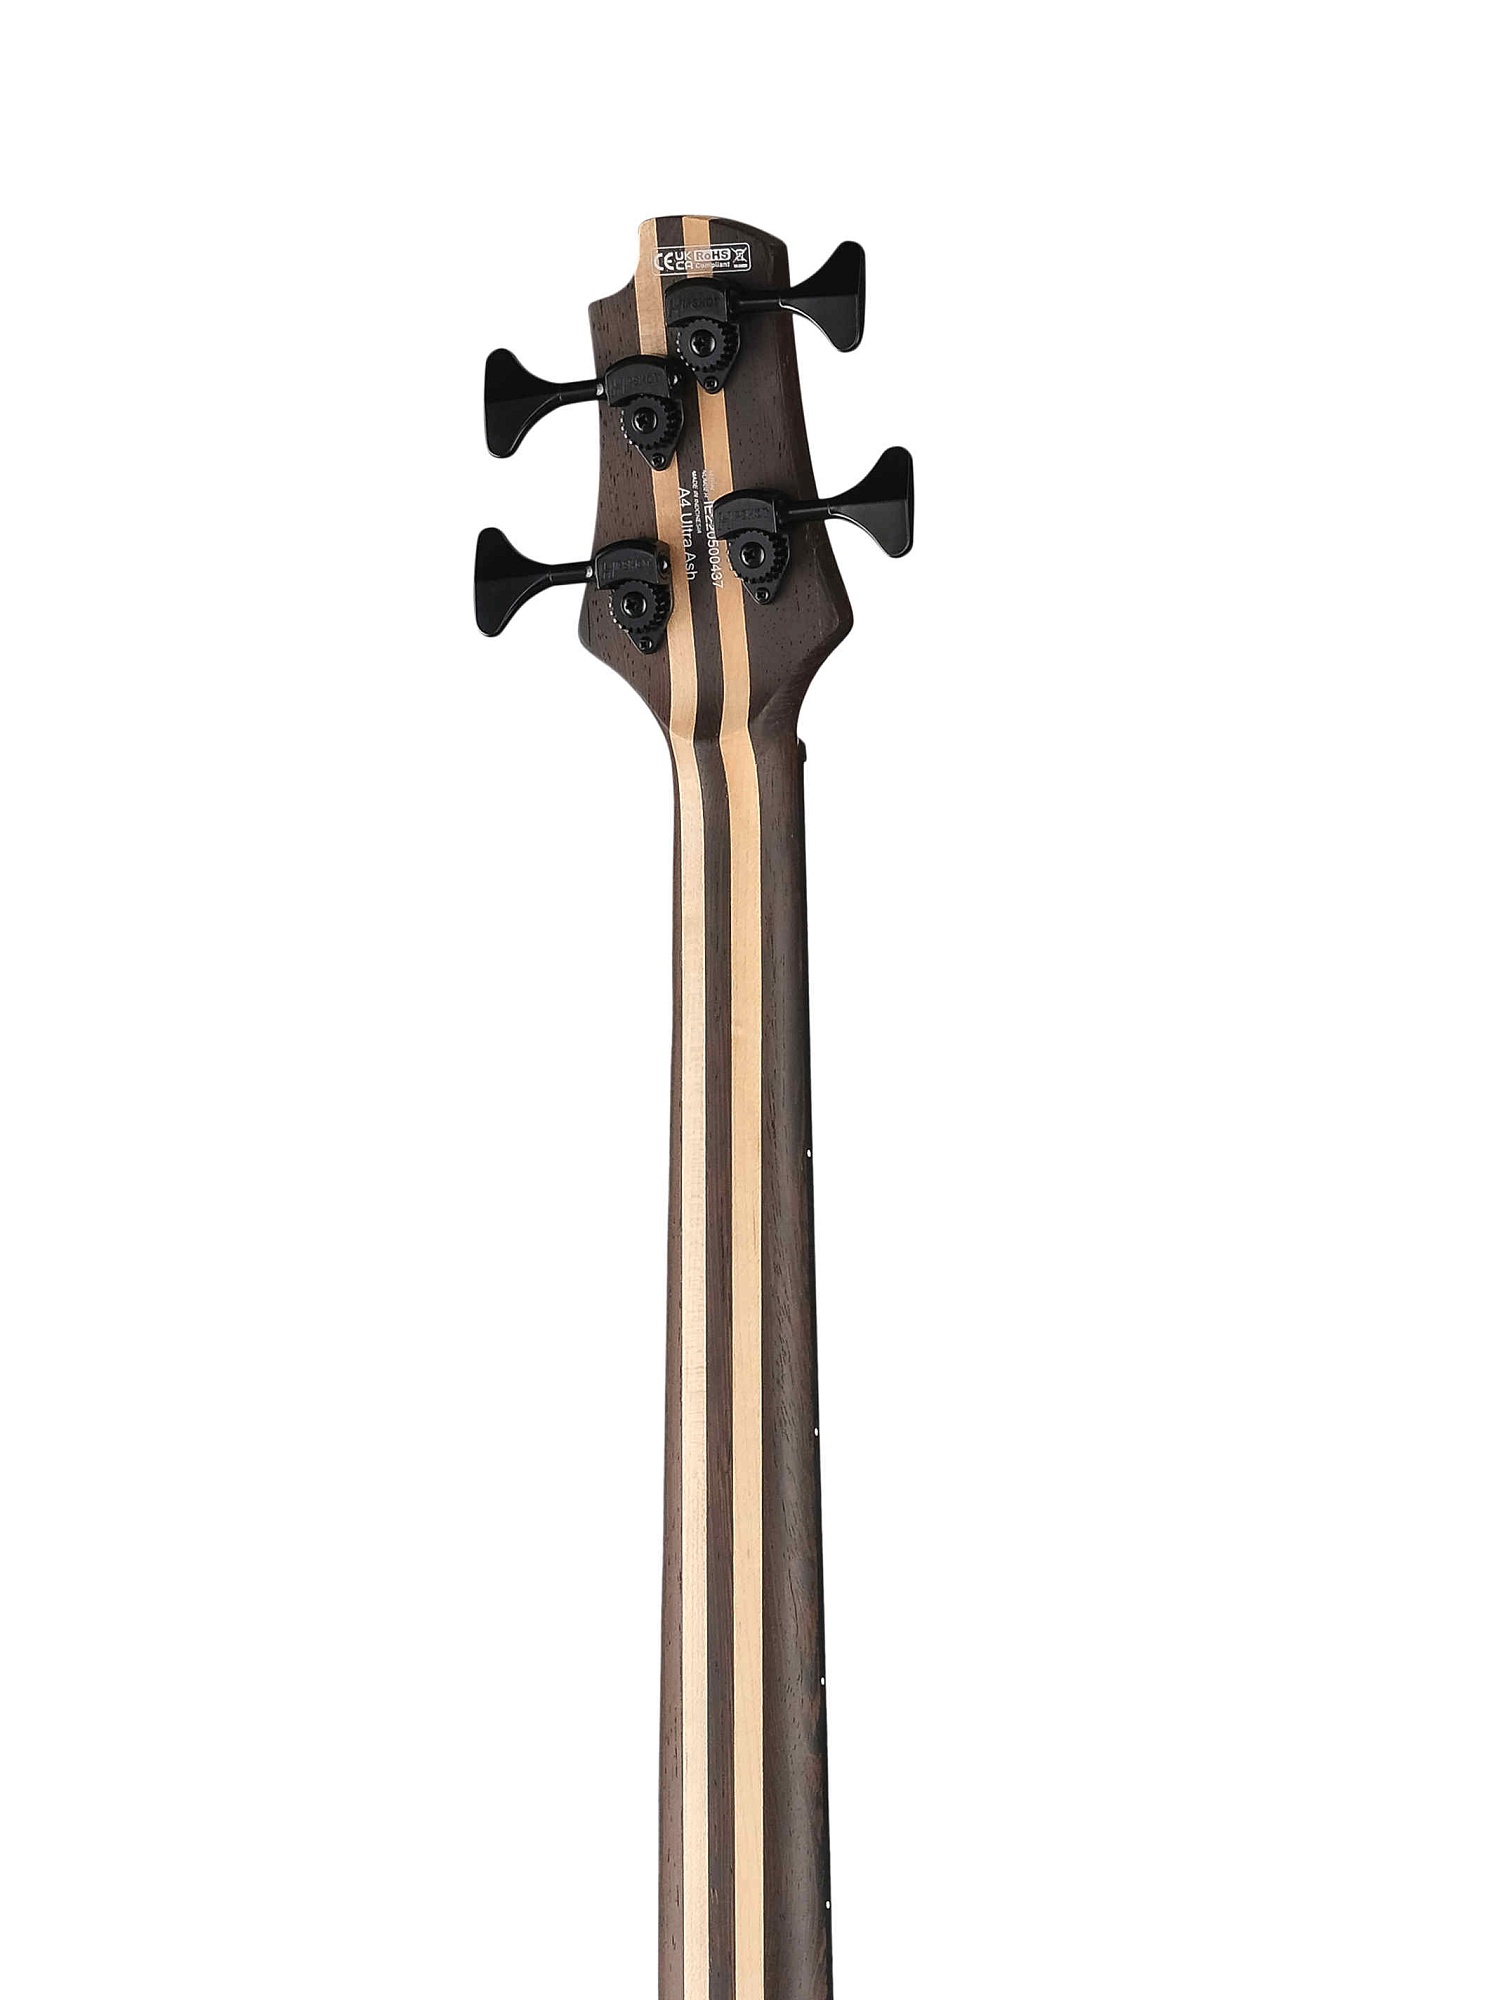 A4-Ultra-Ash-WCASE-ENB Artisan Series Бас-гитара, цвет натуральный, с футляром, Cort купить в prostore.me